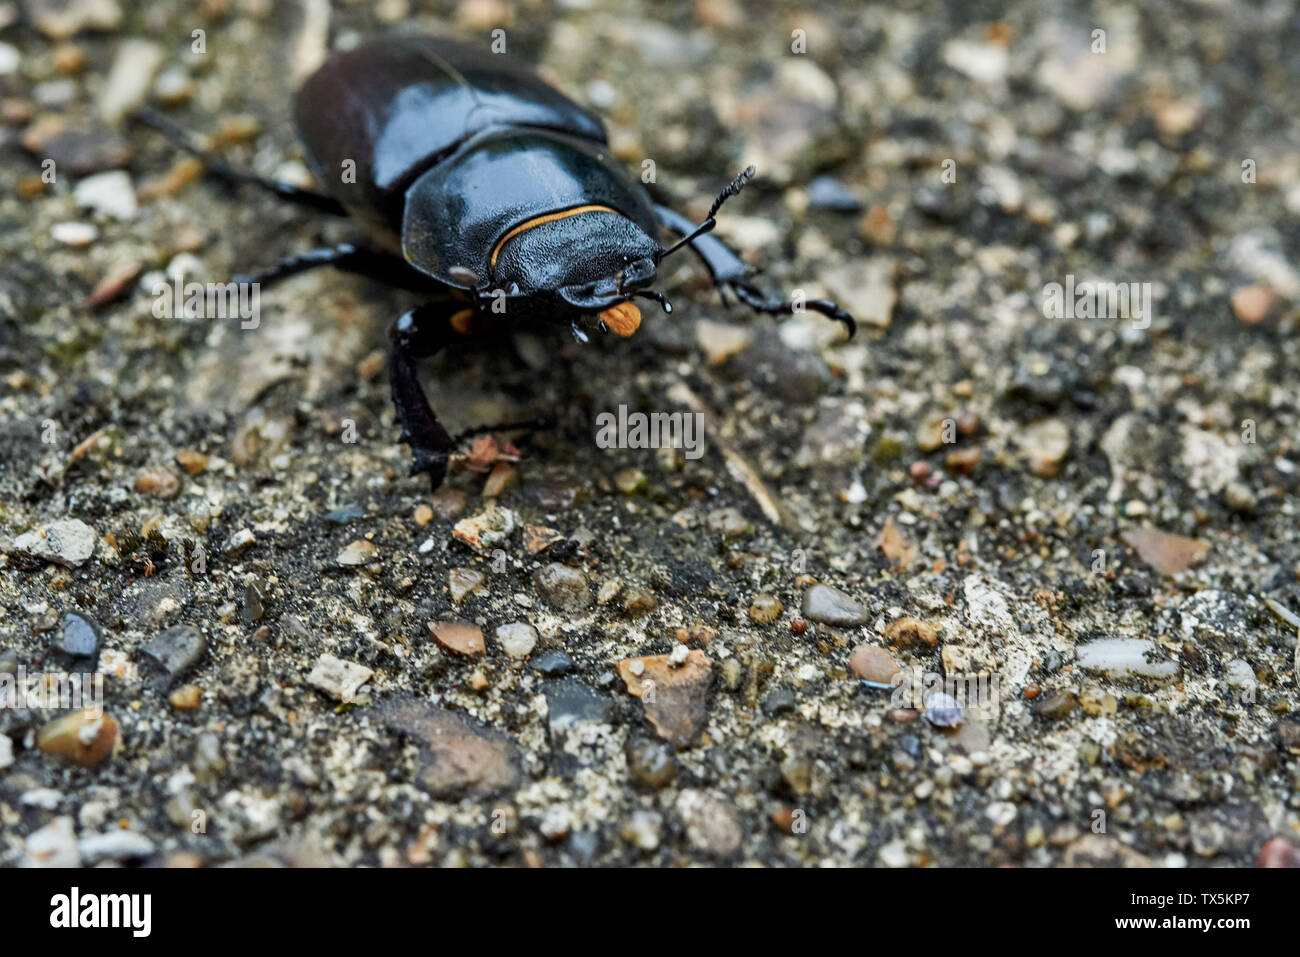 A large, black Lesser Stag Beetle (Dorcus parallelipipedus) ambling along a concrete patio. Stock Photo